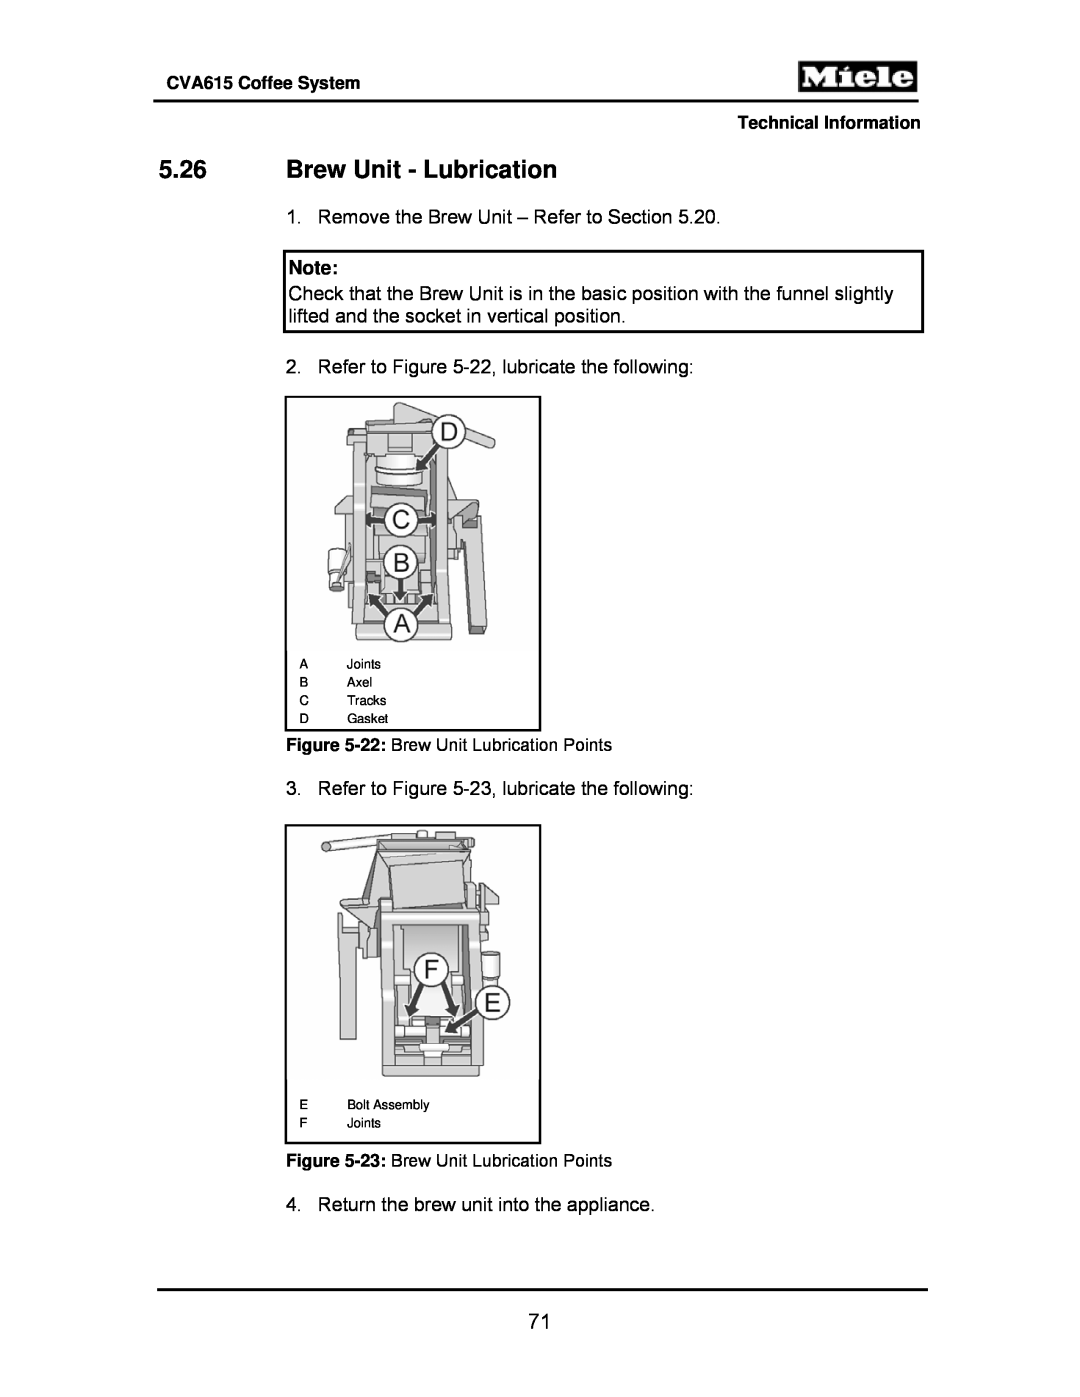 Miele CVA615 manual 5.26Brew Unit - Lubrication 